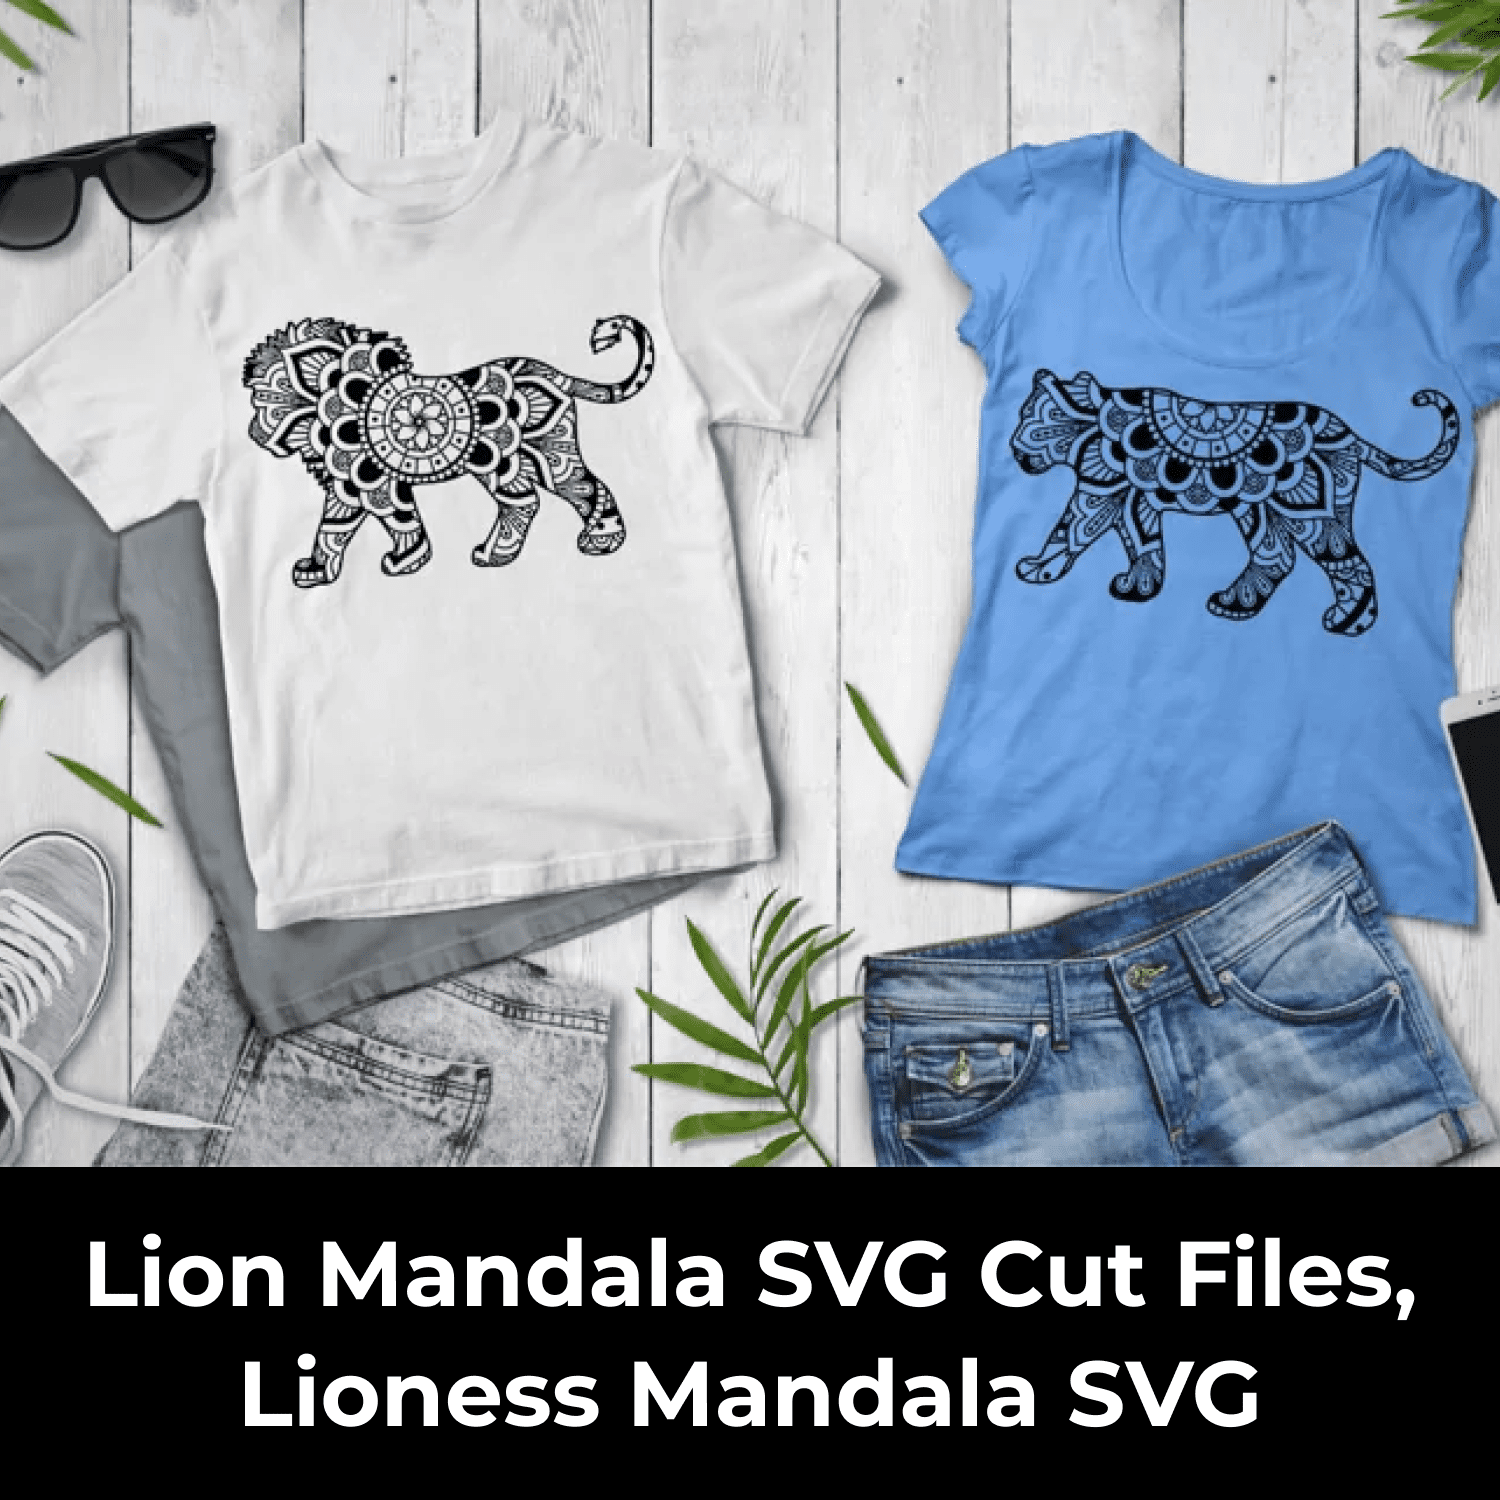 Lion Mandala SVG Cut Files, Lioness Mandala SVG cover image.